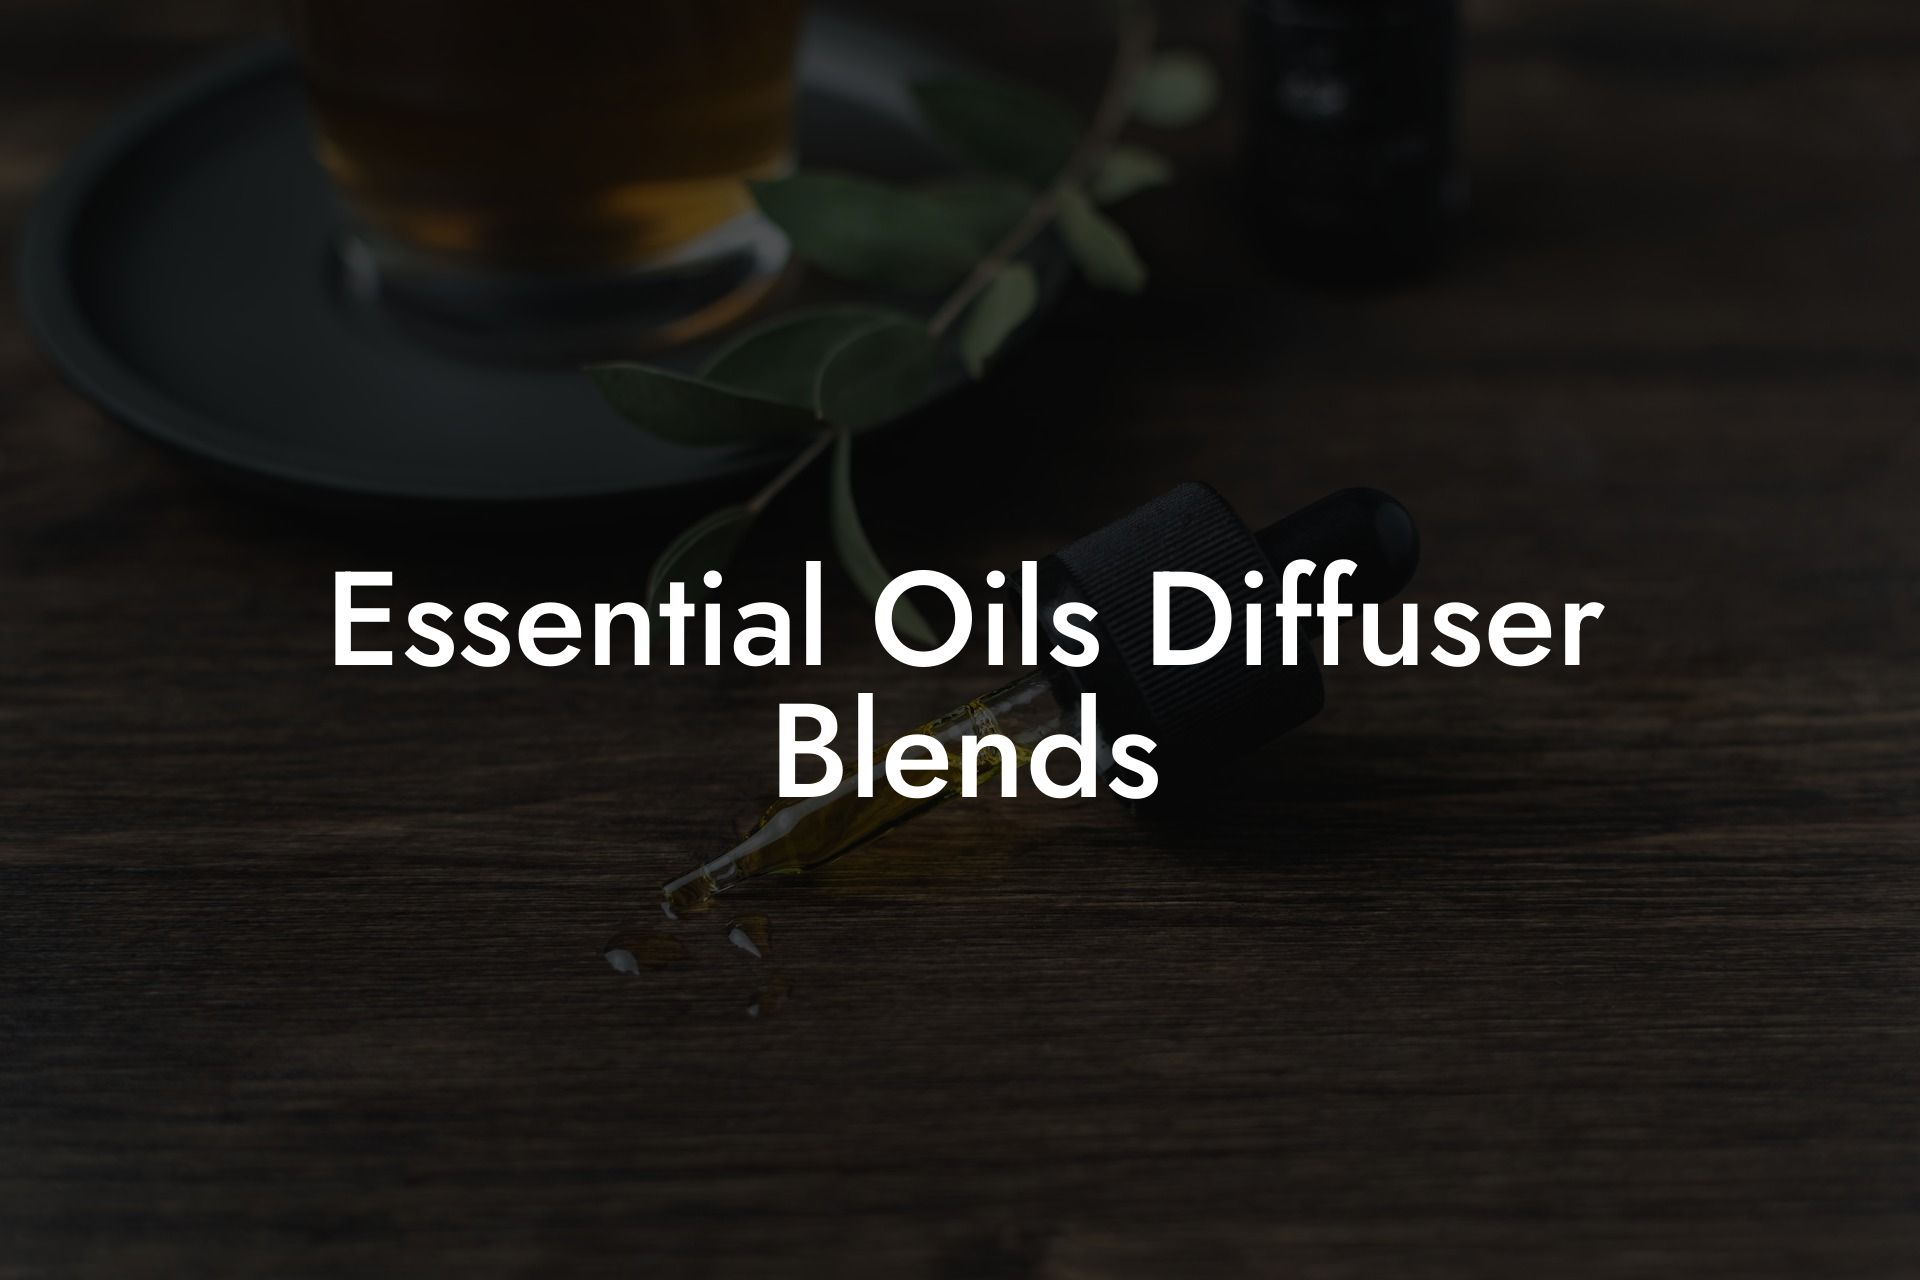 Essential Oils Diffuser Blends